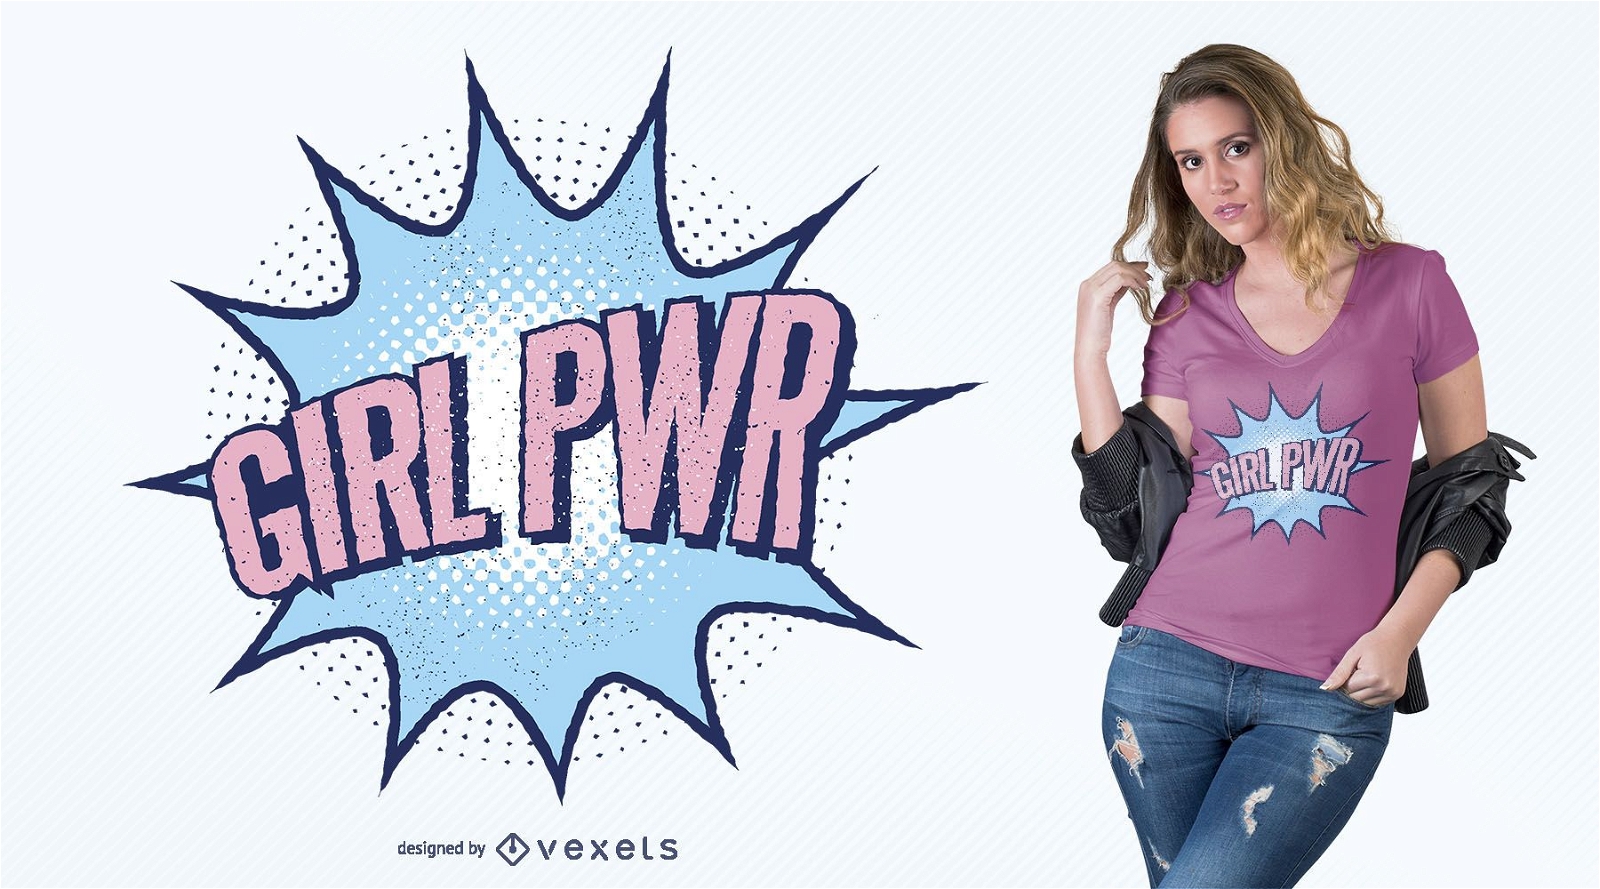 Girl power t-shirt design